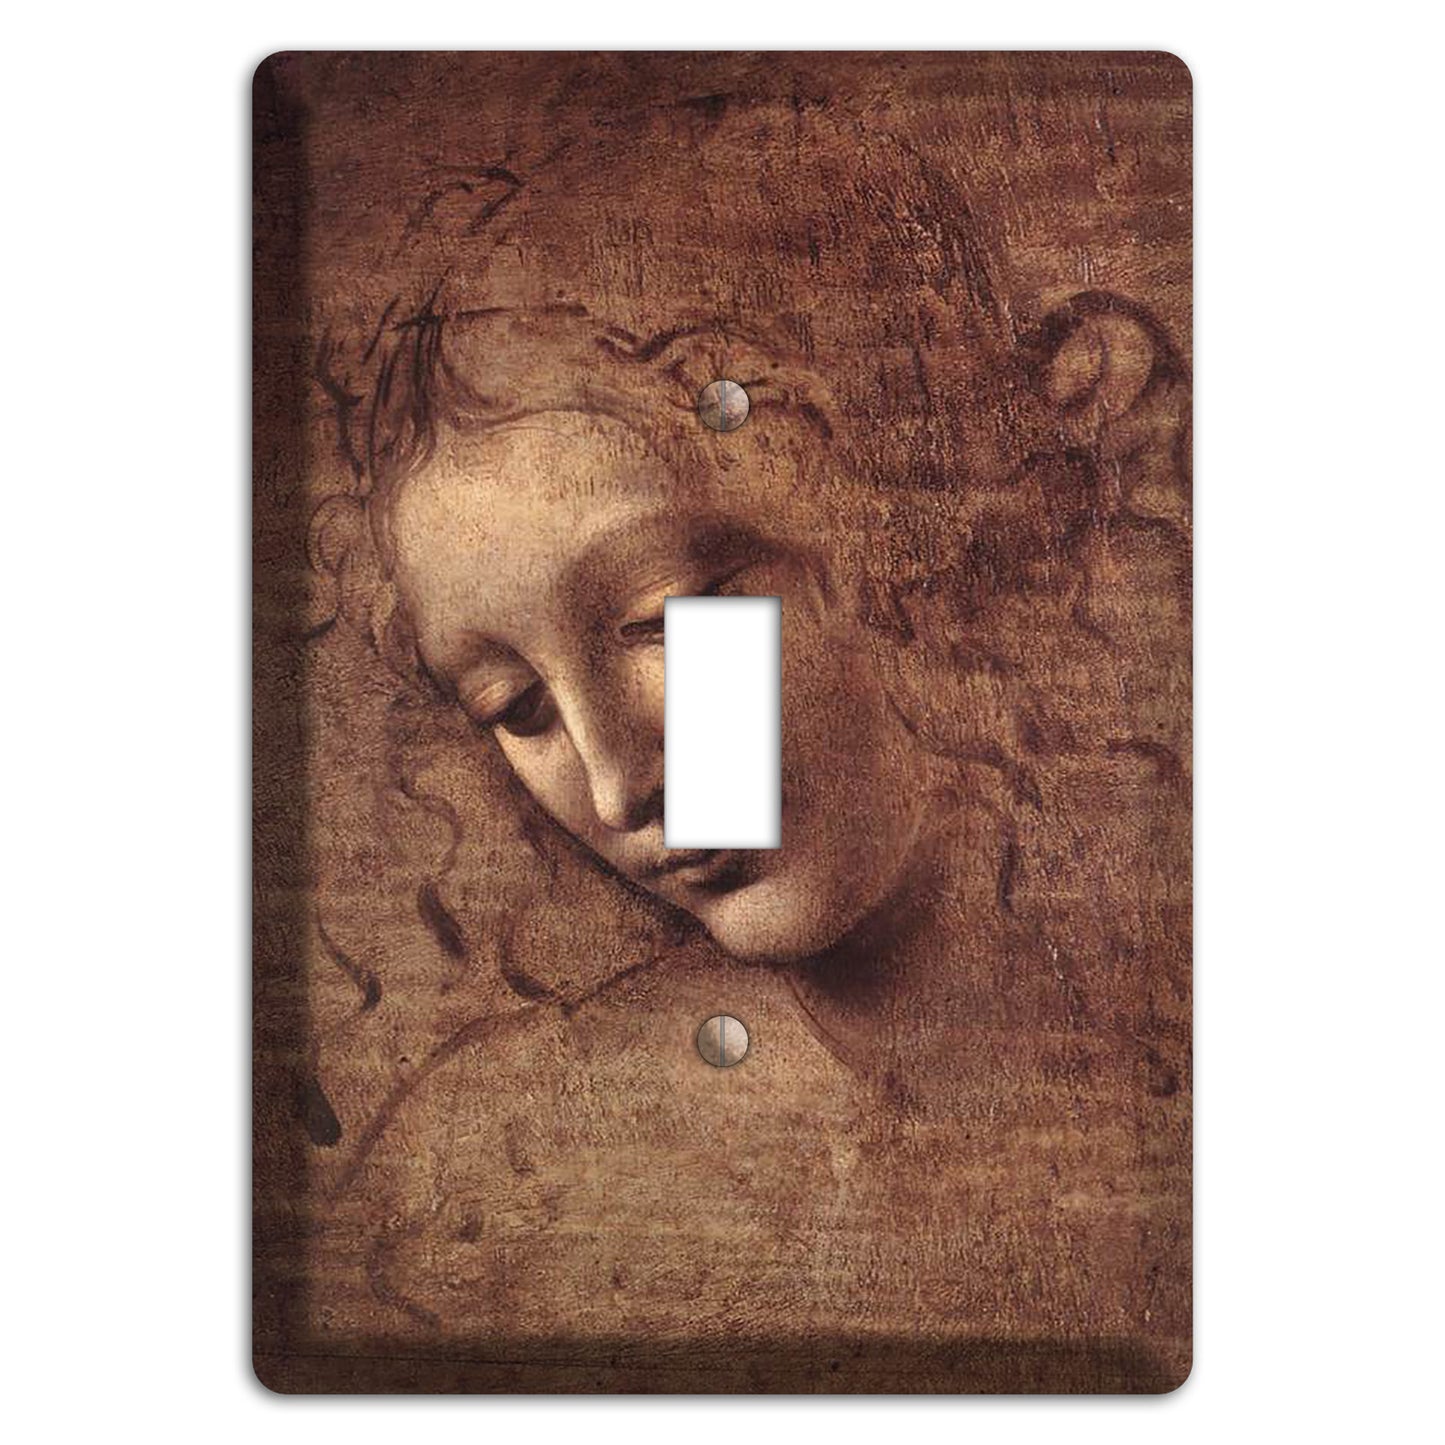 Da Vinci - Female Head Cover Plates